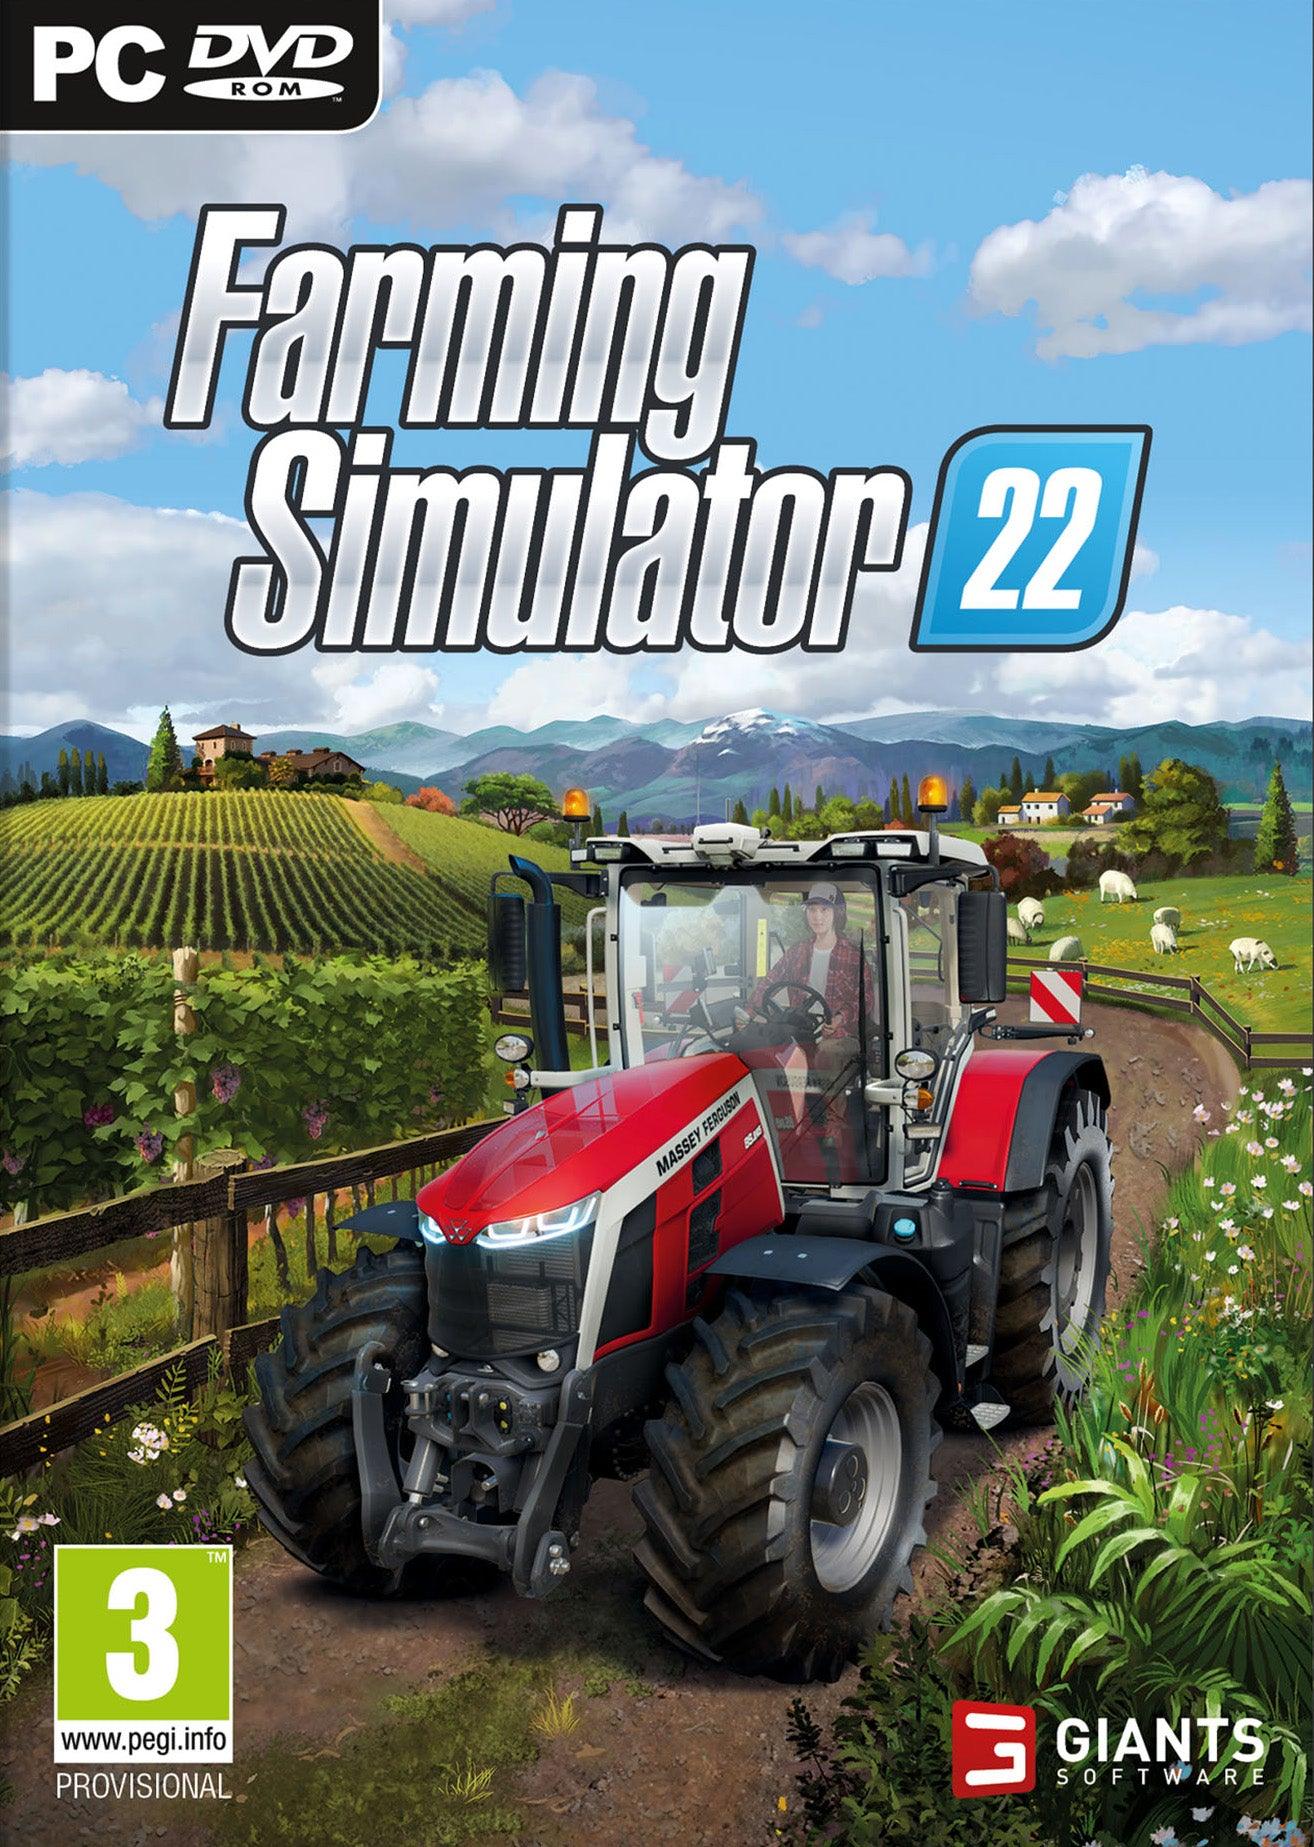 Farming Simulator 22 - Want a New Gadget